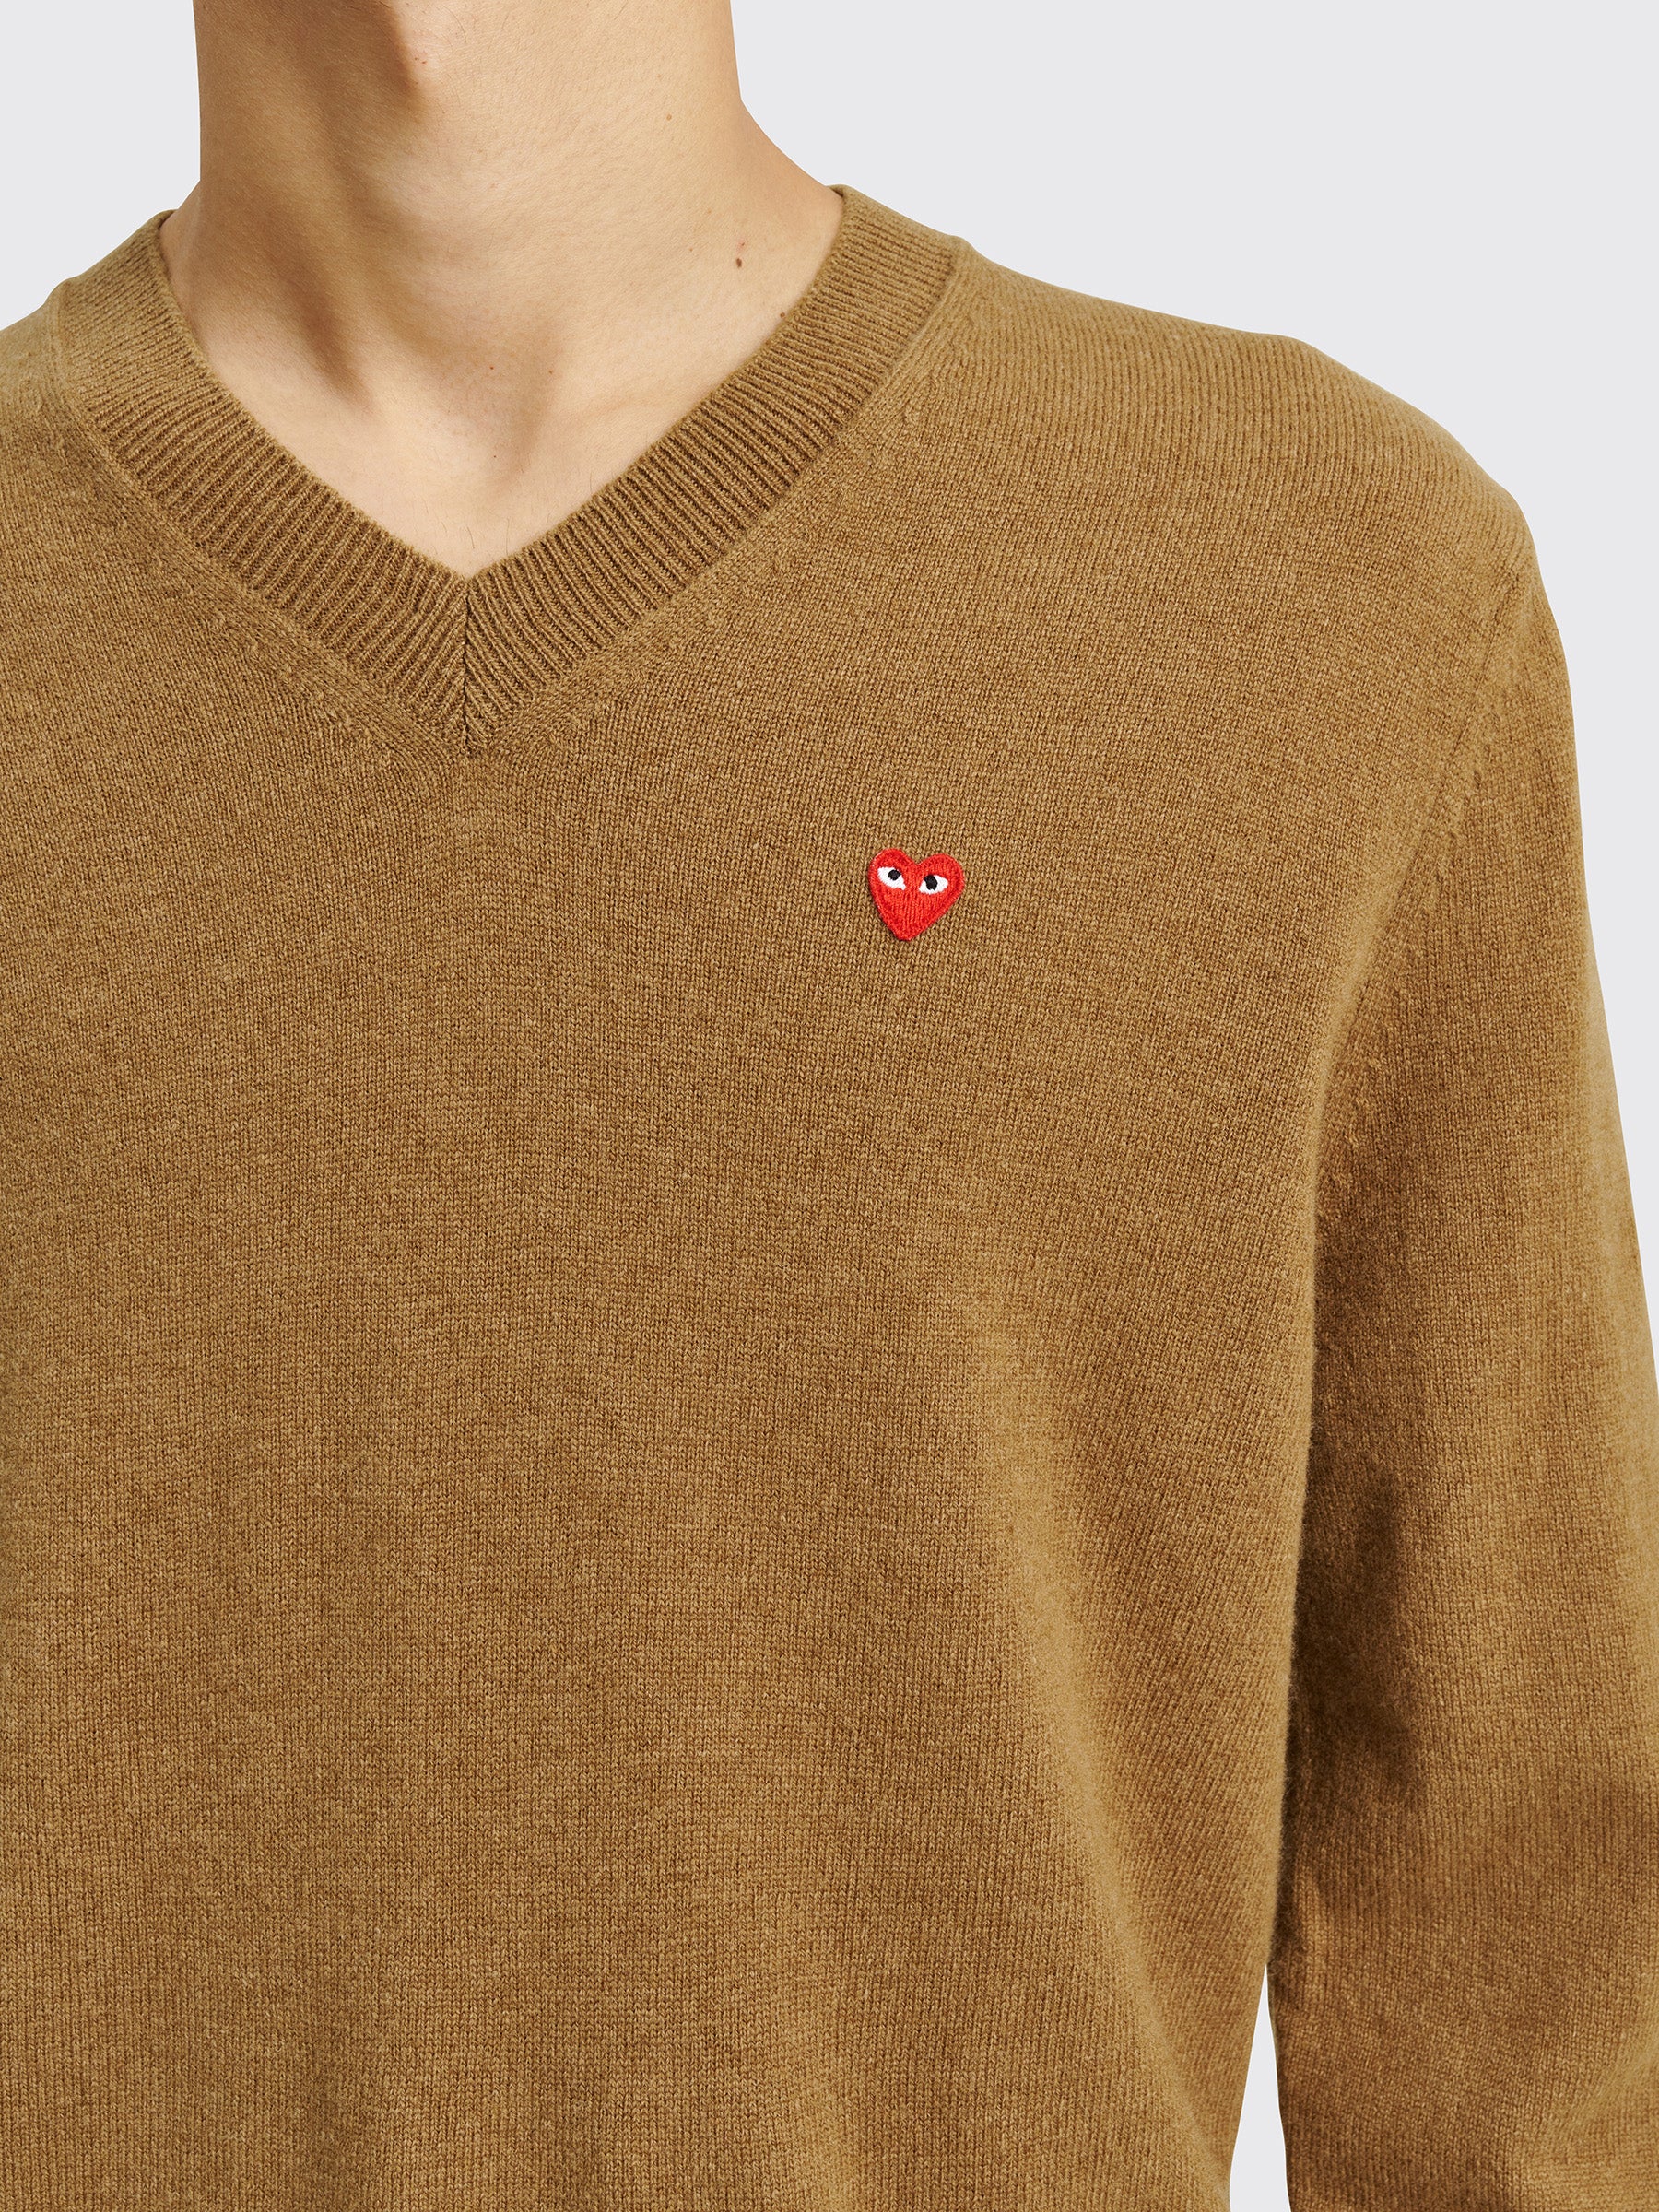 Comme des Garçons Play Mini Heart V-Neck Knit Sweater Brown